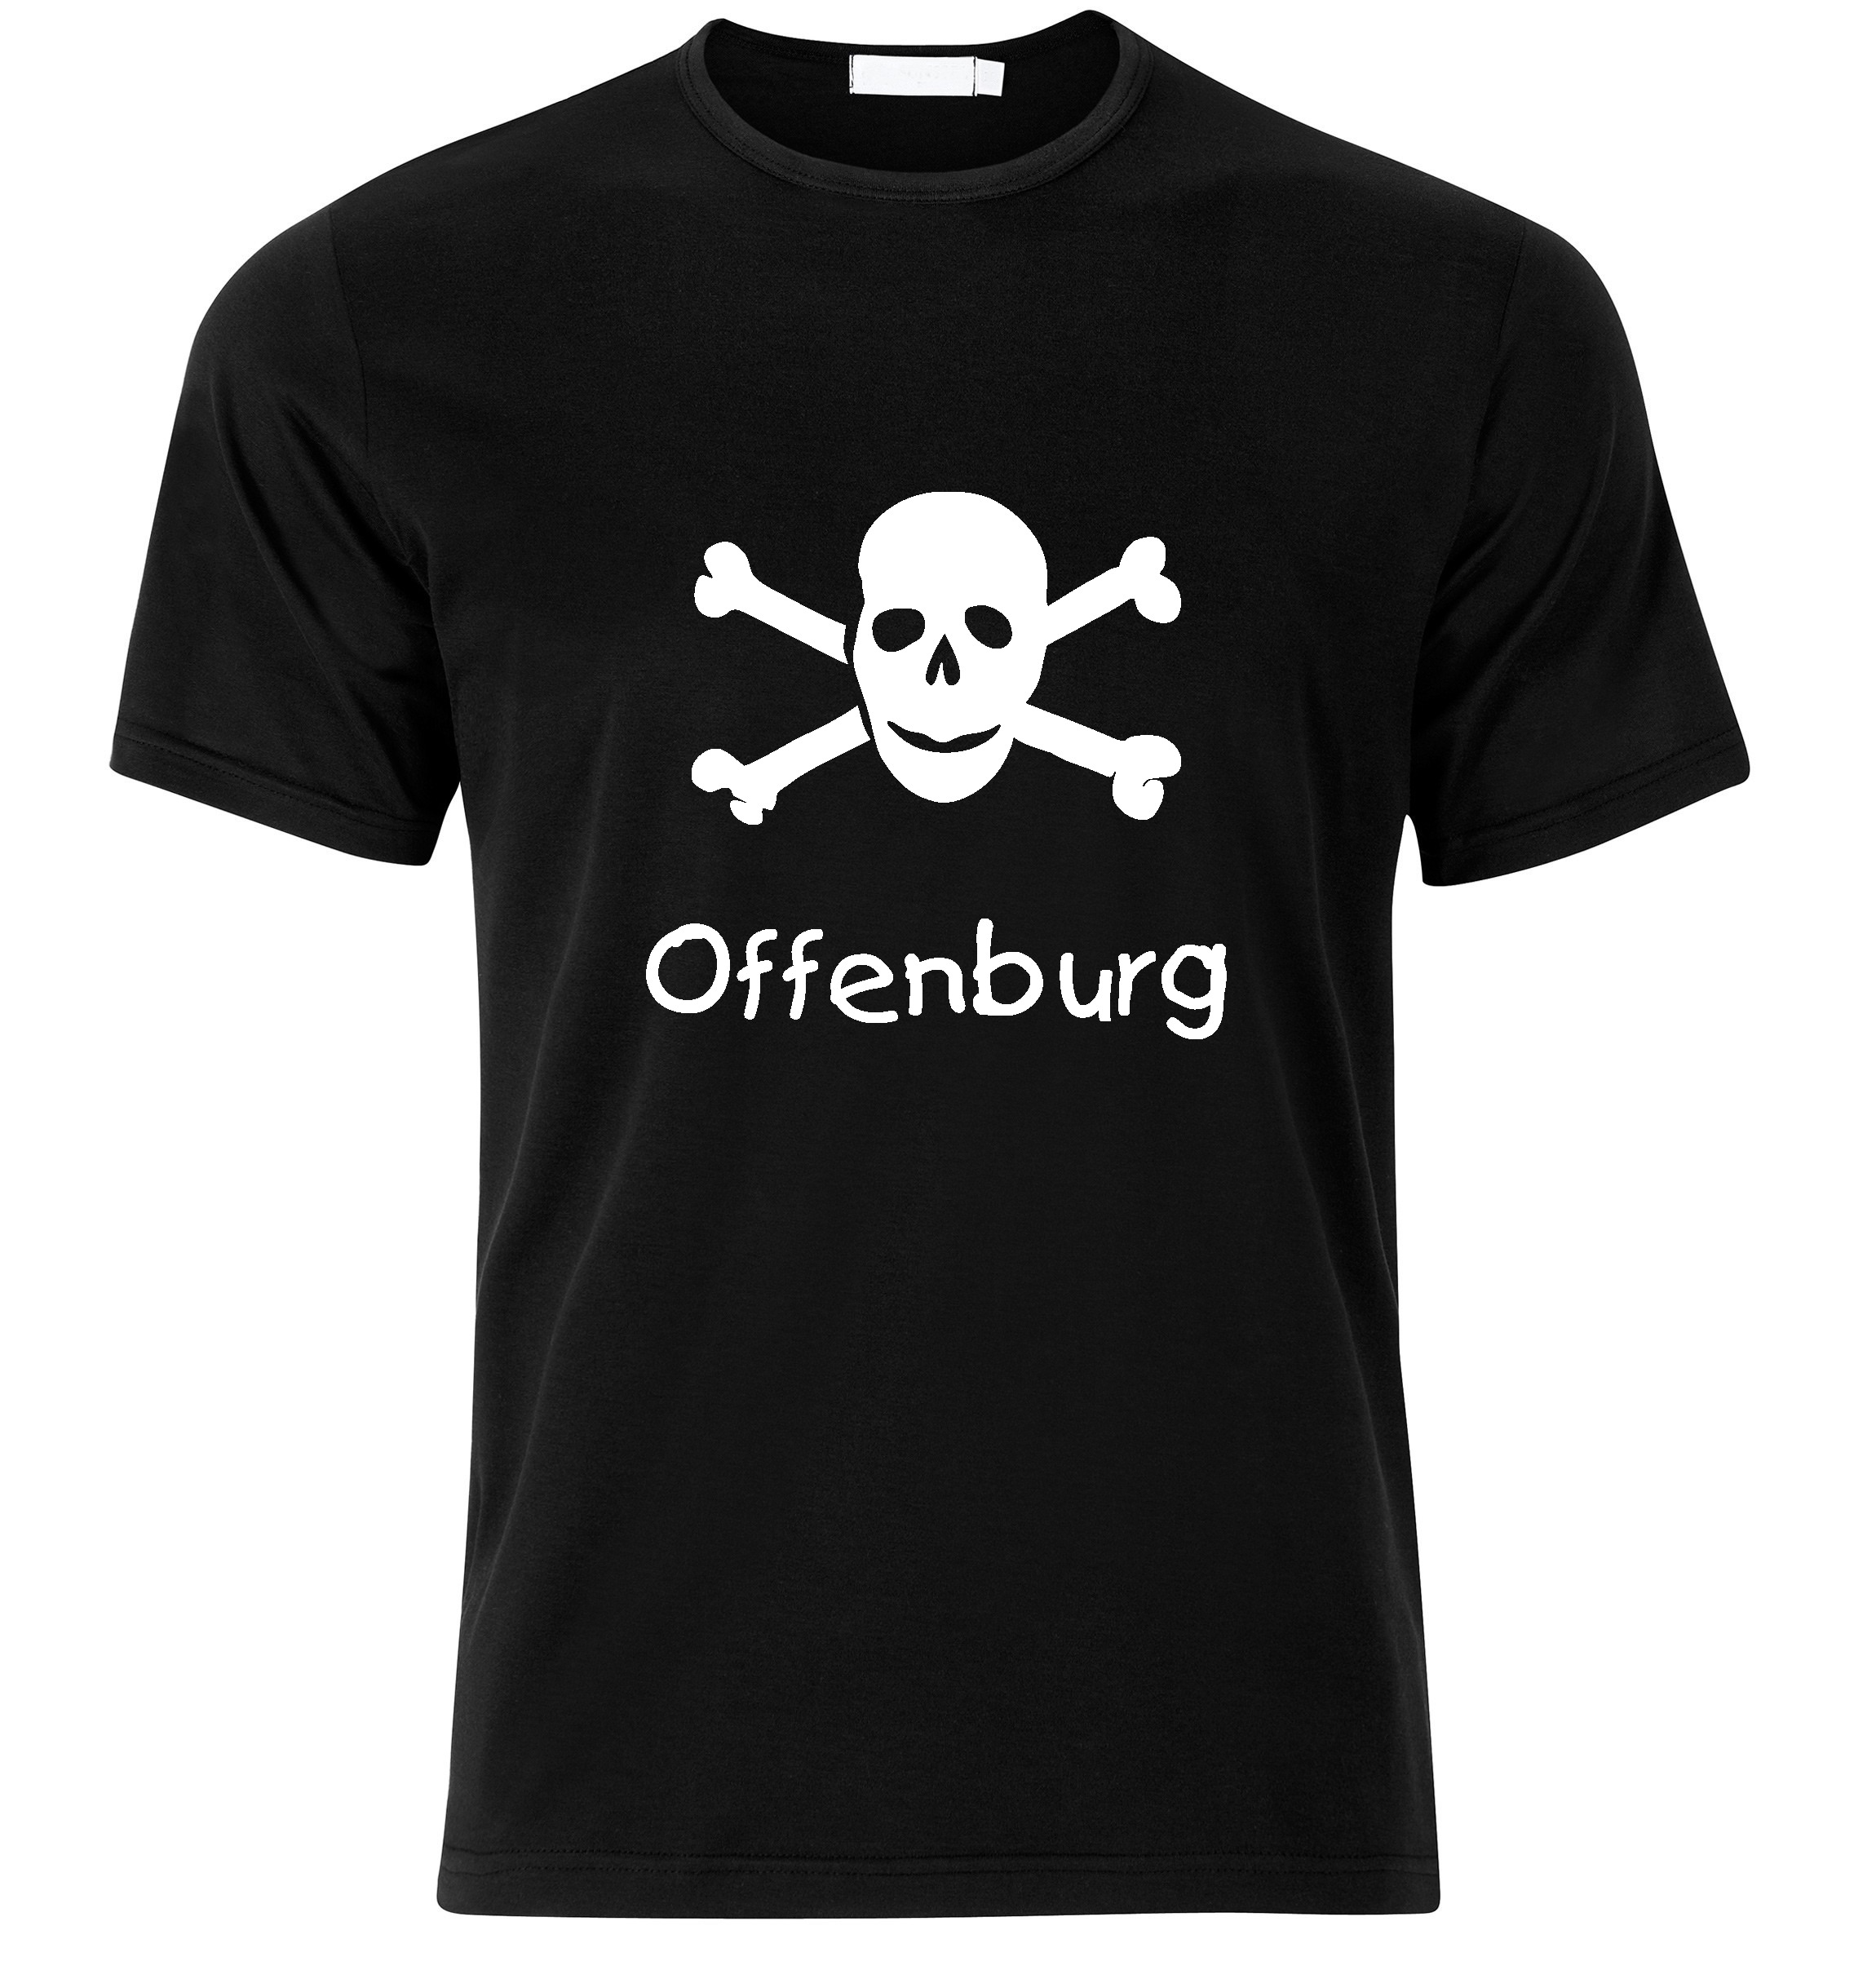 T-Shirt Offenburg Jolly Roger, Totenkopf